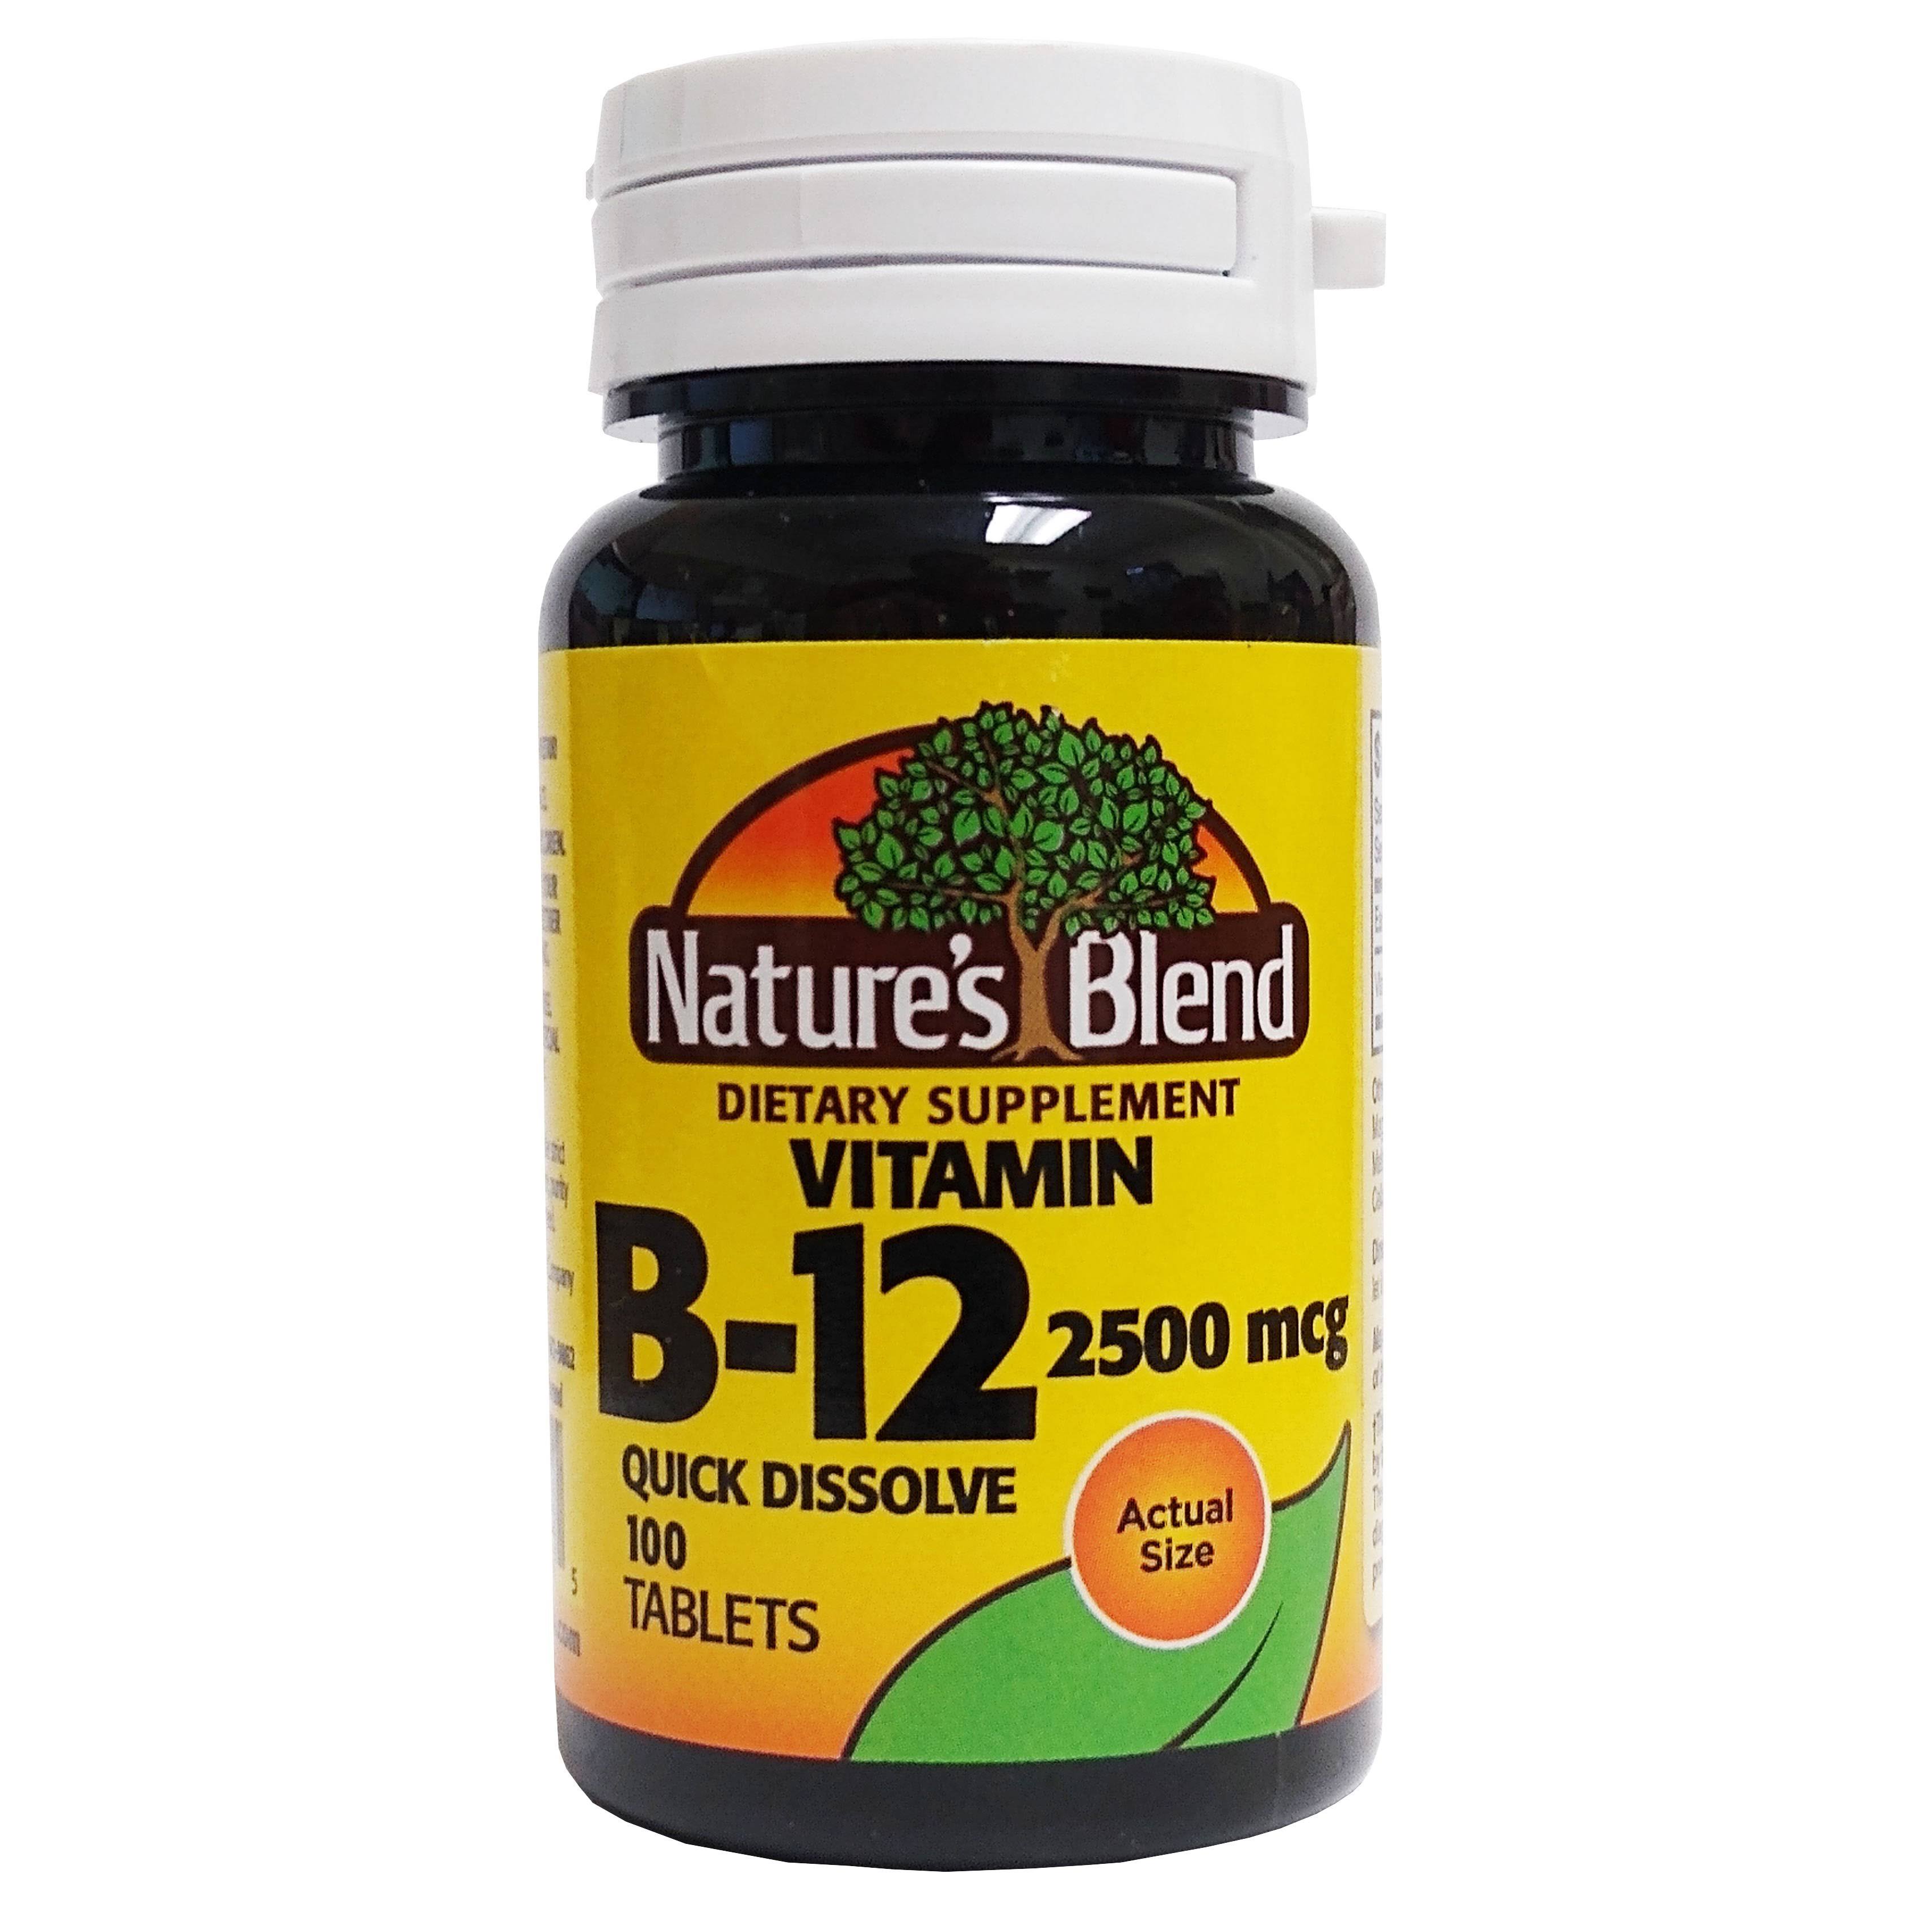 Nature's Blend Vitamin B-12 2500mcg Tablets